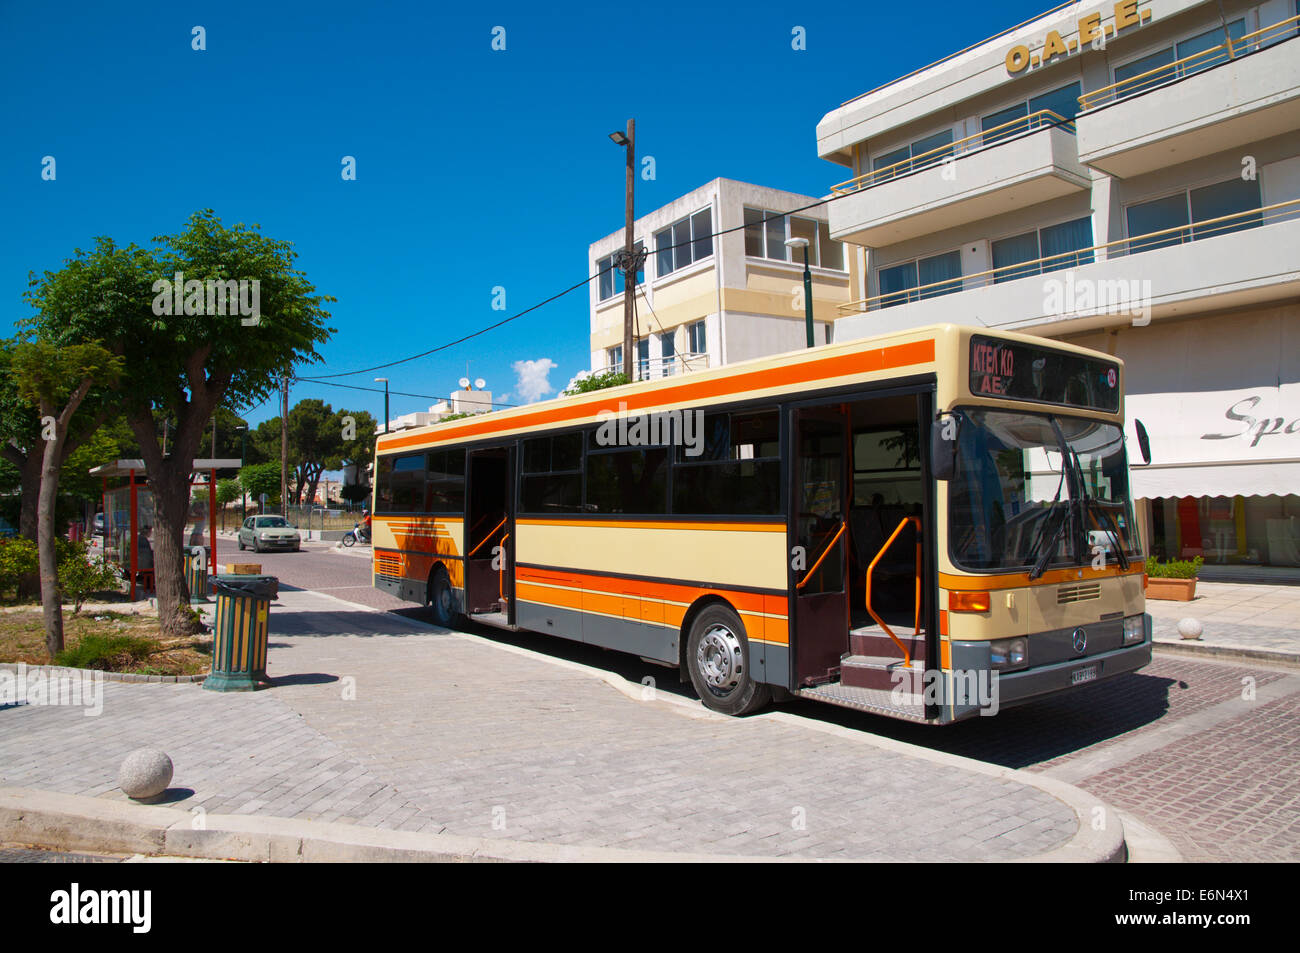 KTEL, the long distance bus station, Kleopatras street, Kos town, Kos island, Dodecanese islands, Greece, Europe Stock Photo